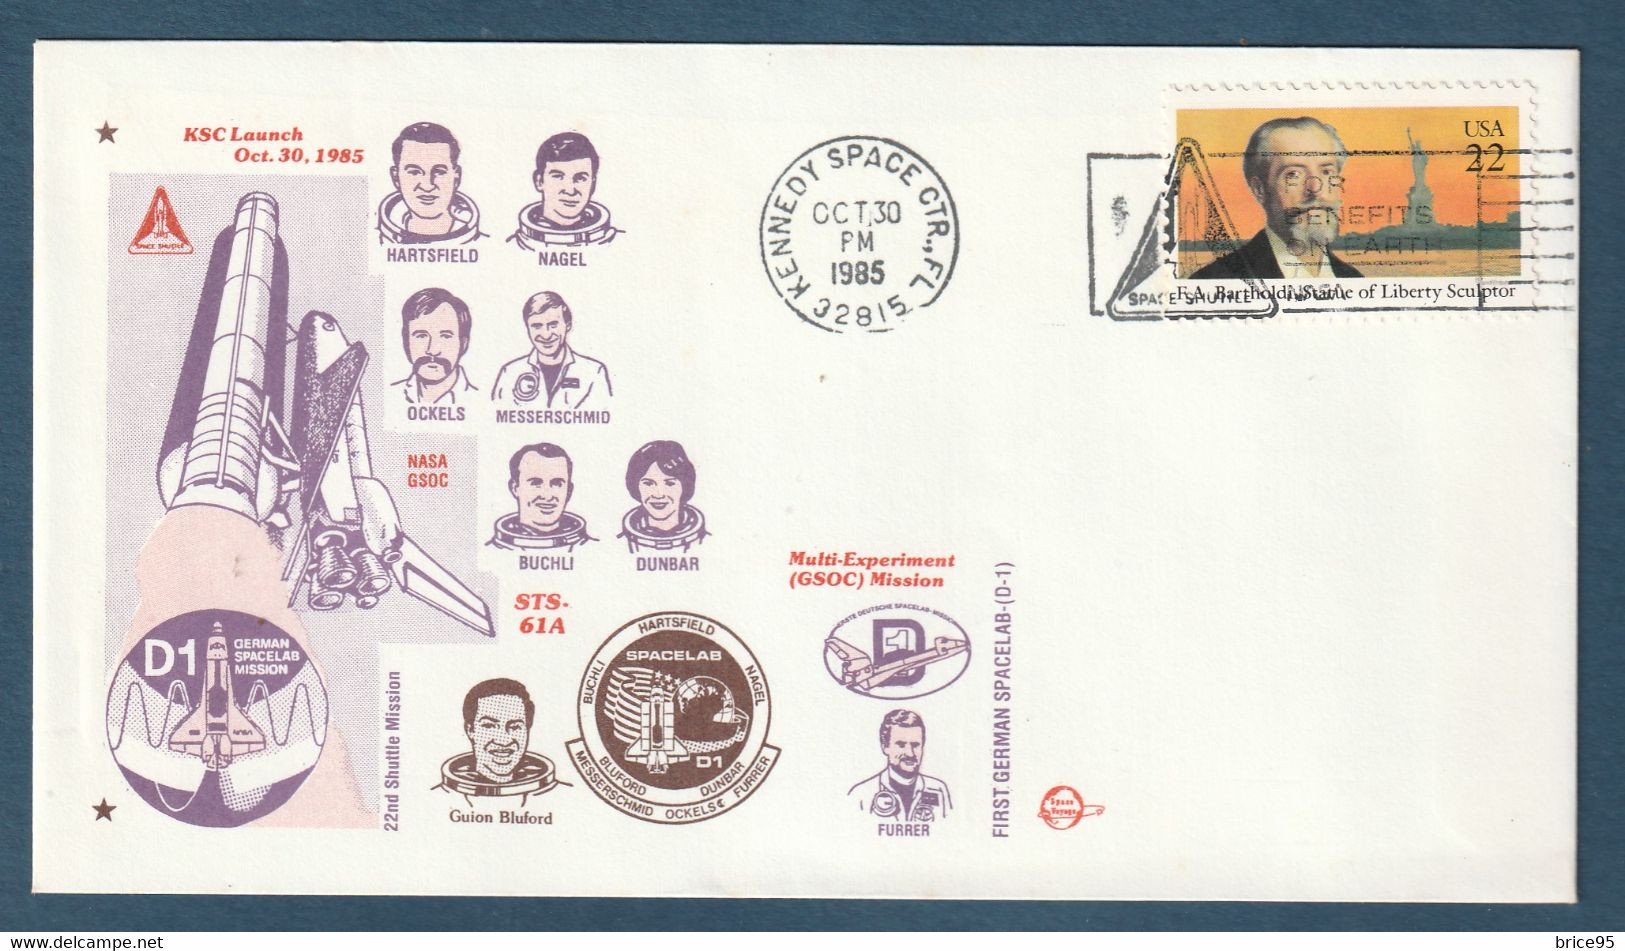 ✈️ Etats Unis - First German - Spacelab - D 1 - Multi Experiment Mission - GSOC - Houston - 1985 ✈️ - North  America